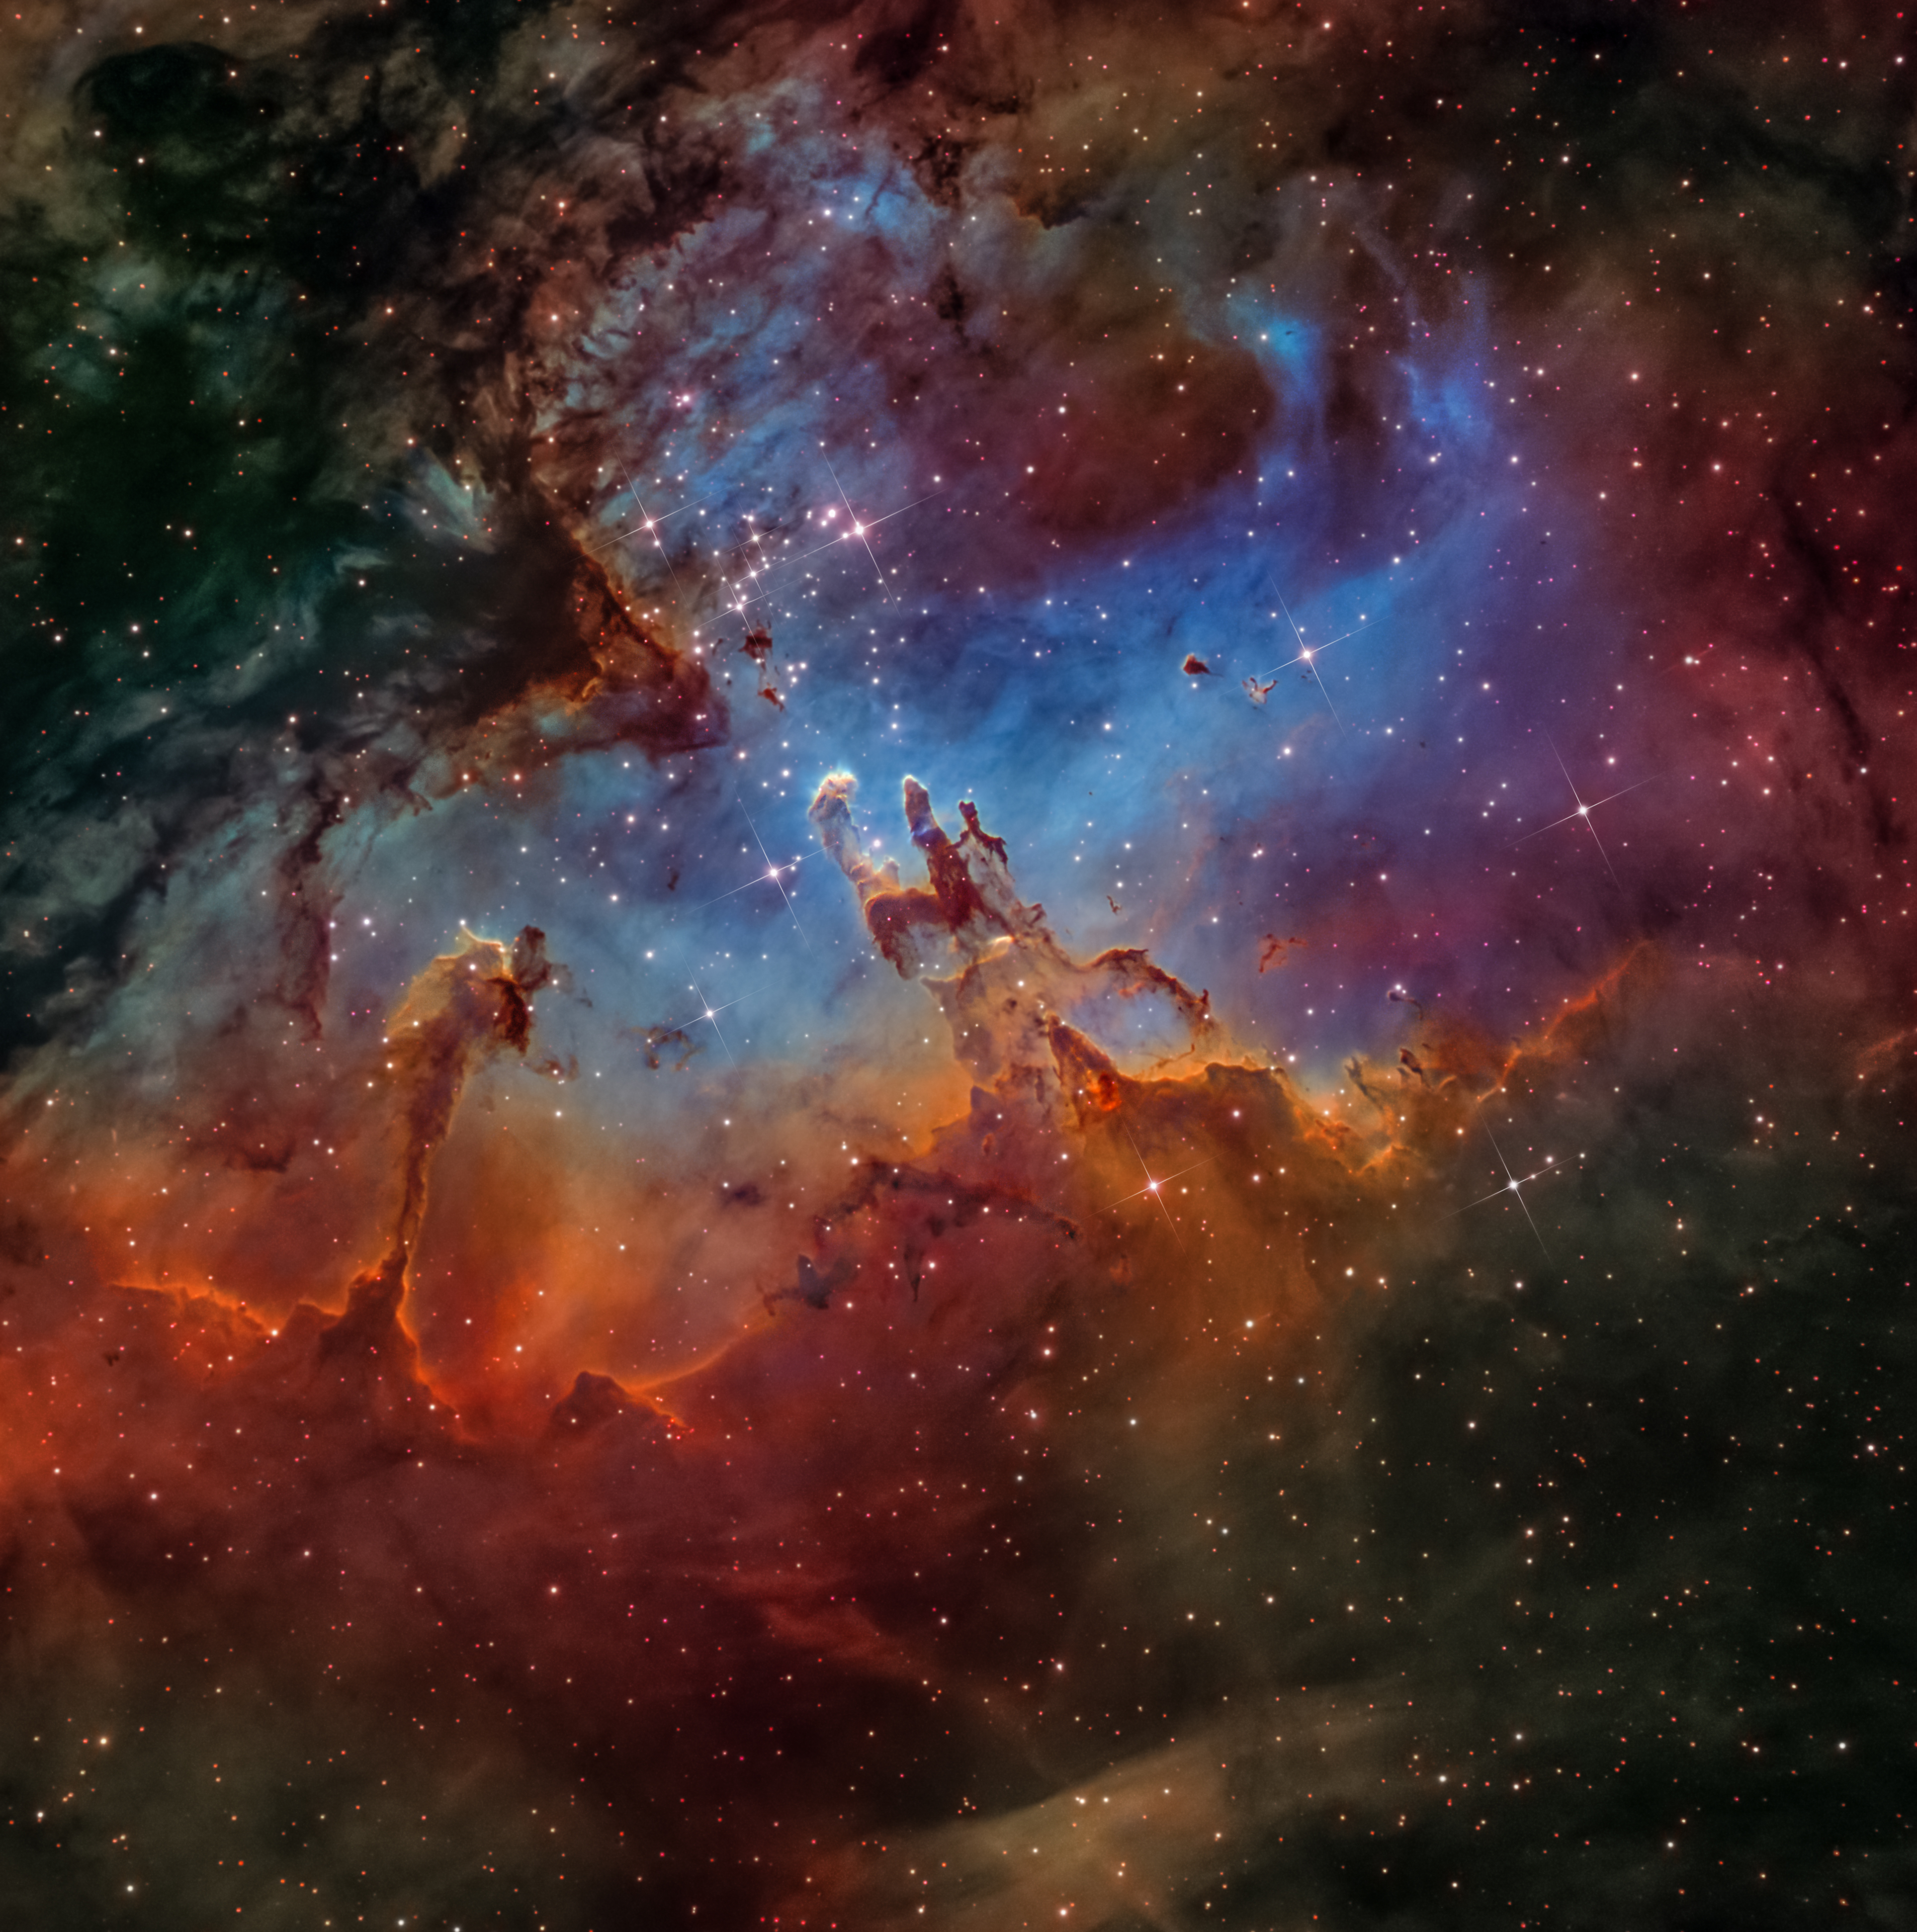 Eagle Nebula Hanson Astronomy Photos The Eagle Nebula M16.